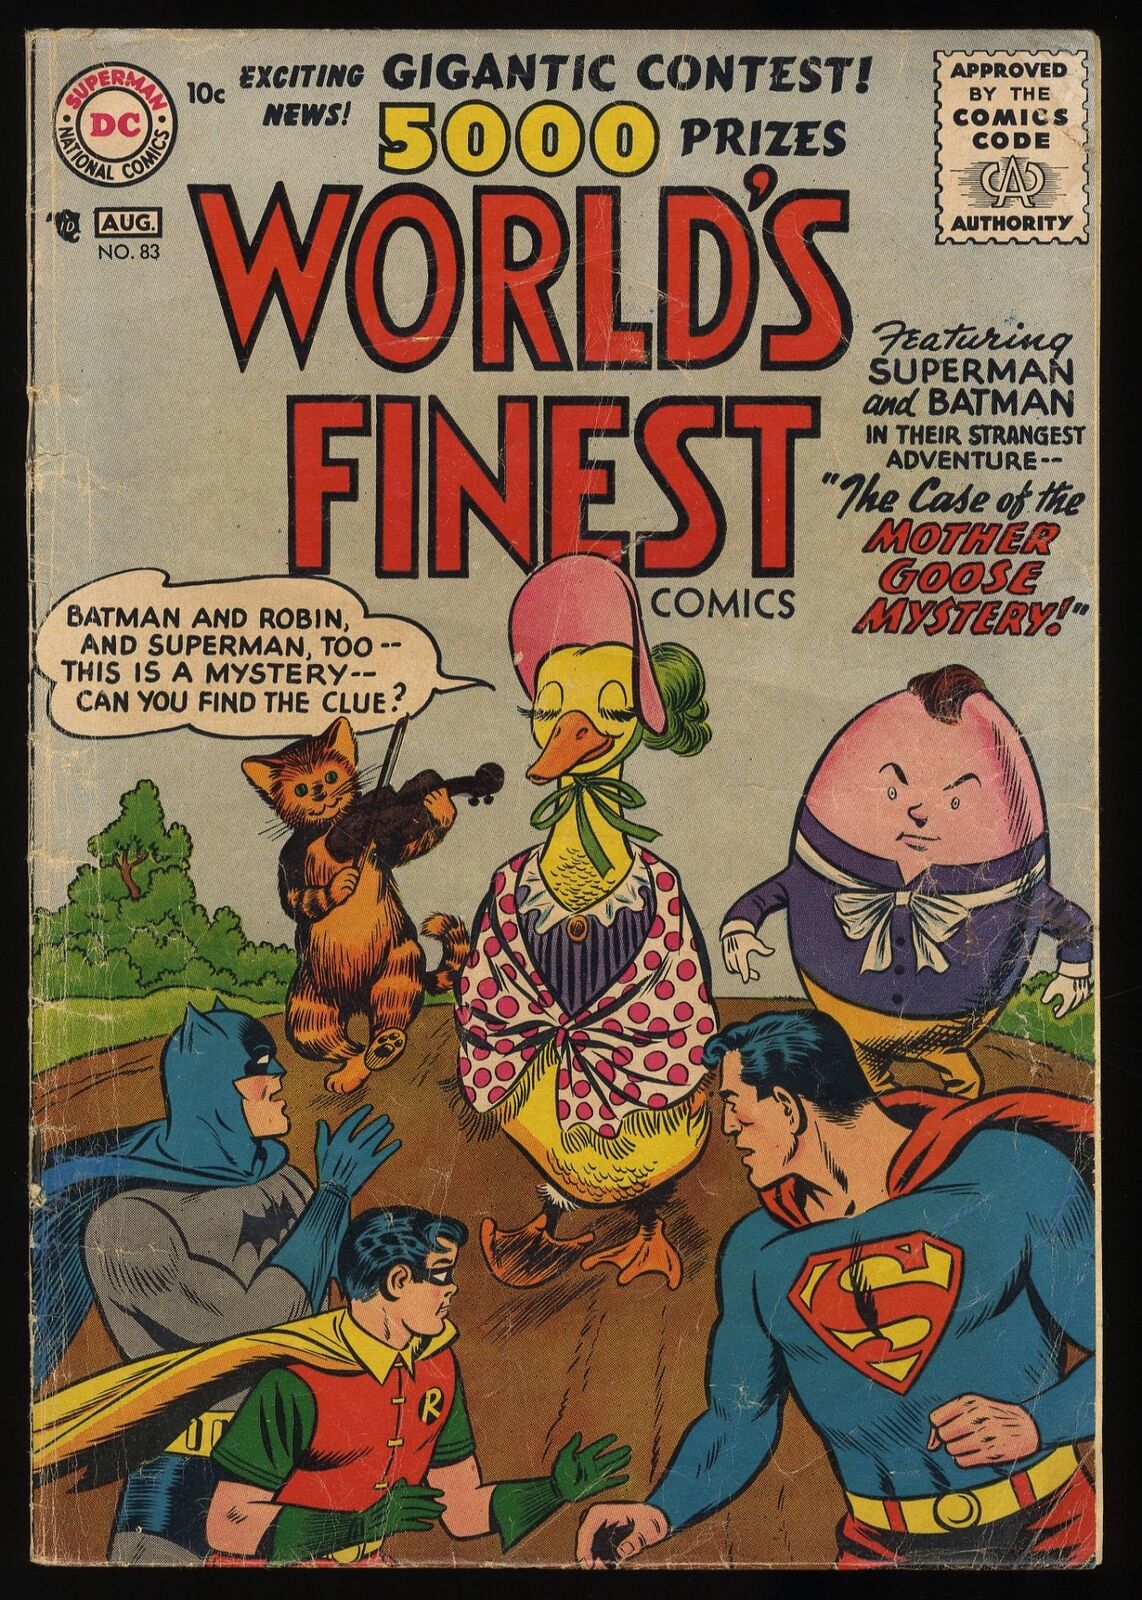 World's Finest Comics #83 GD/VG 3.0 (Restored) Superman! Batman and Robin!